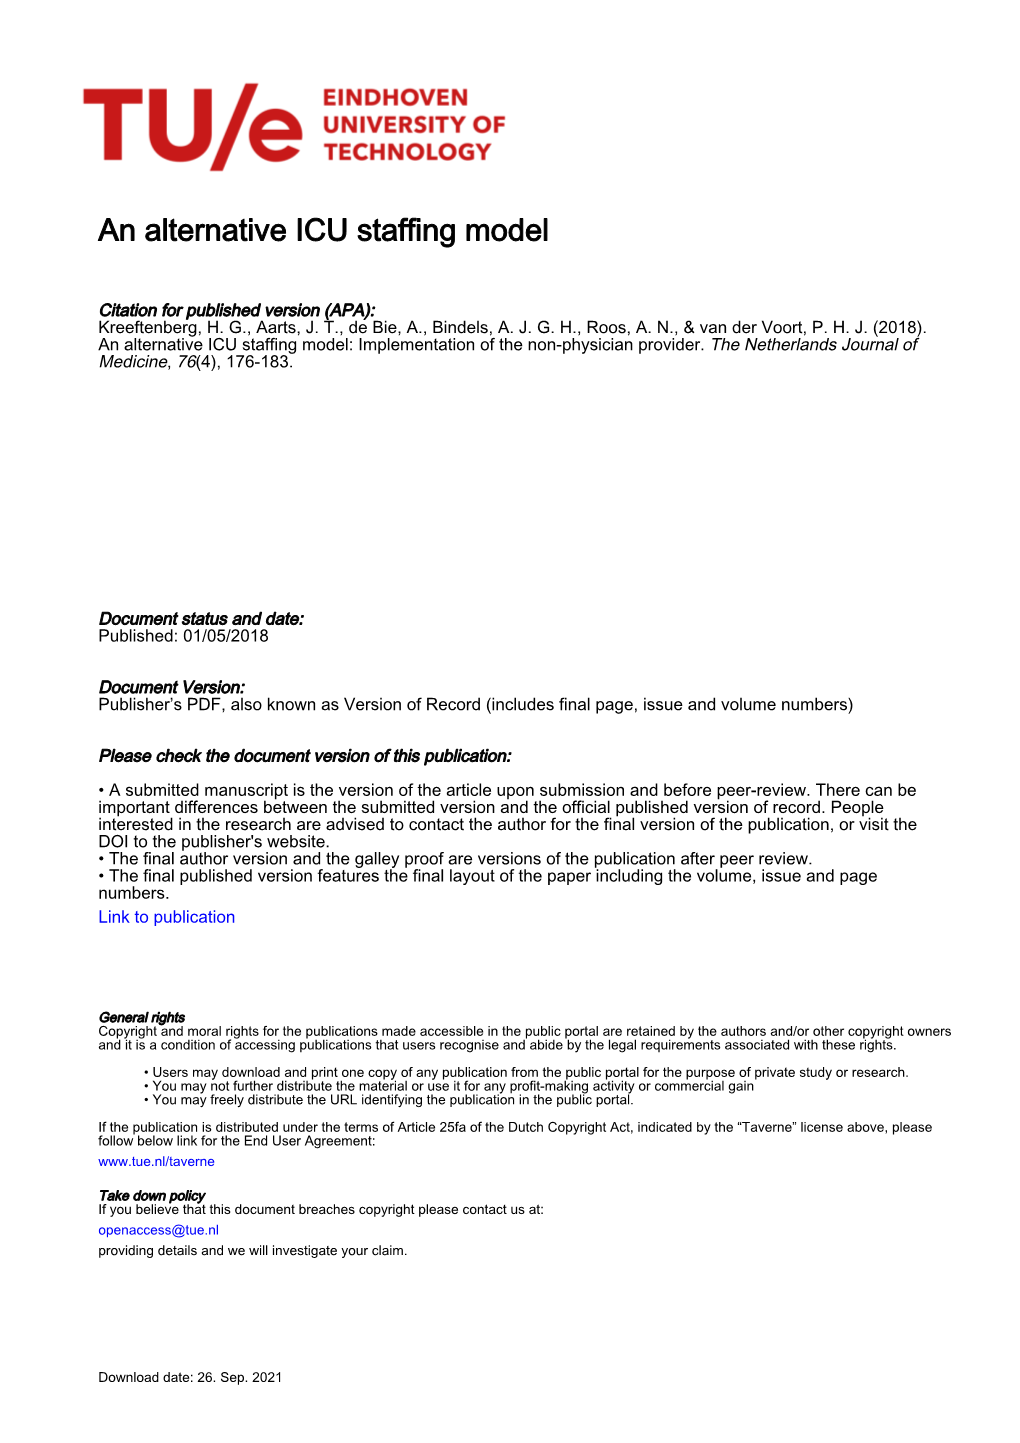 An Alternative ICU Staffing Model